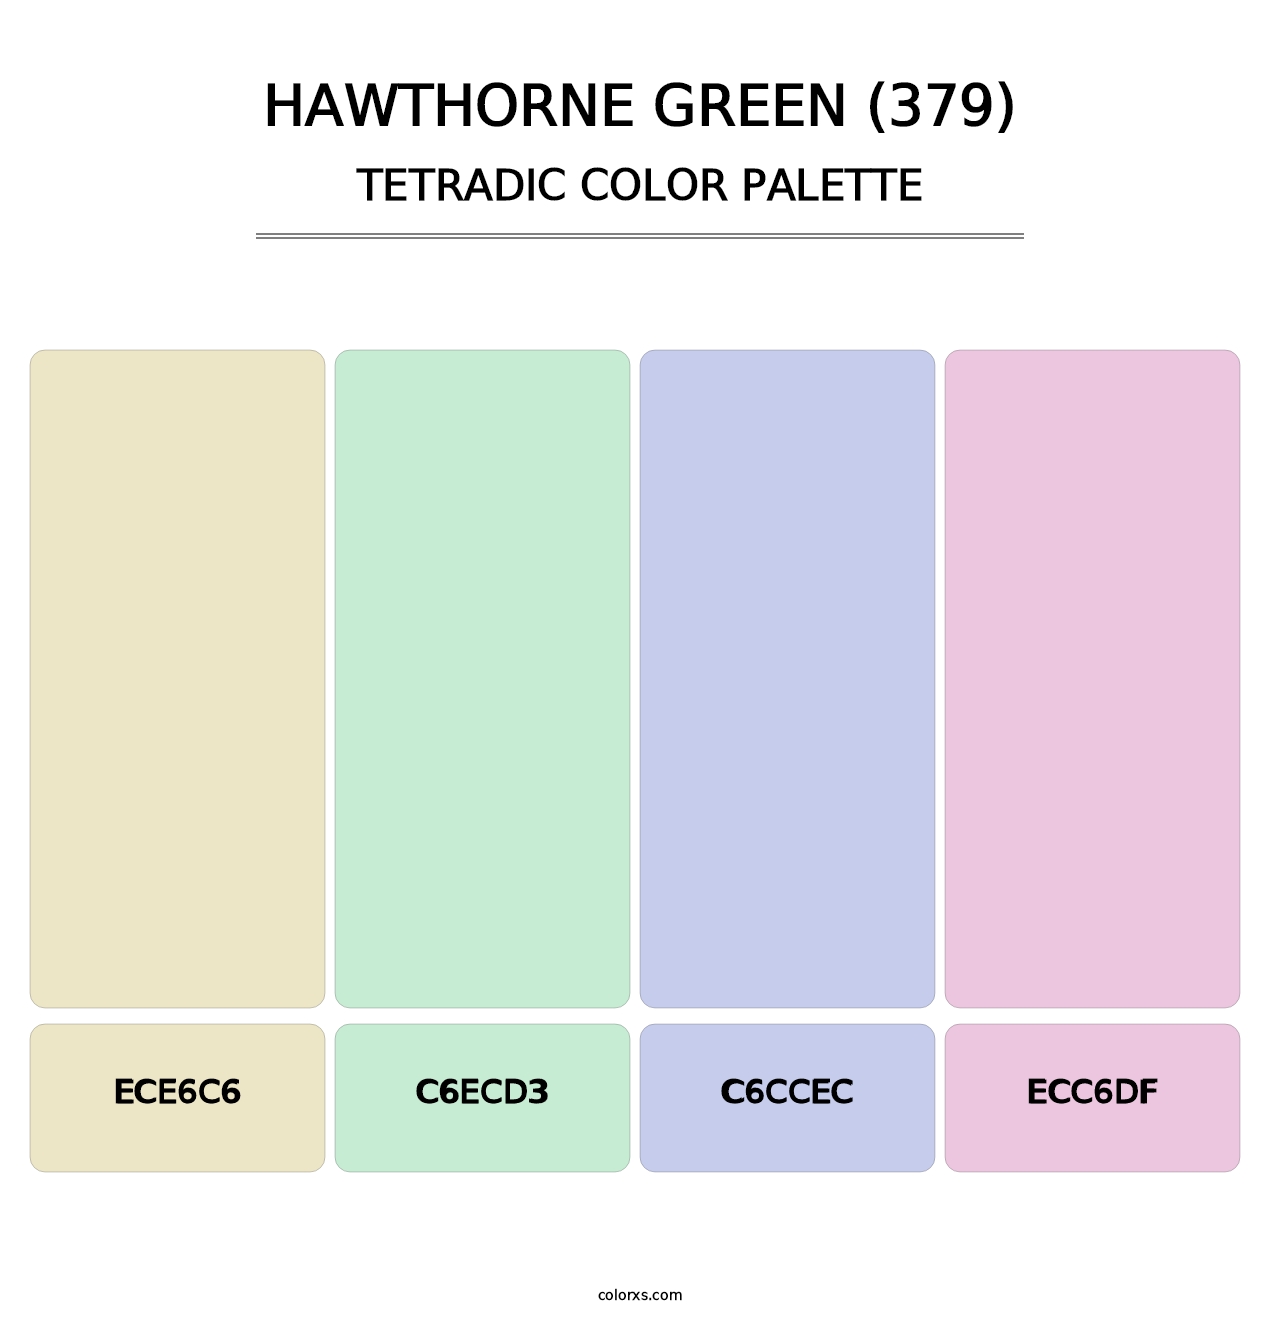 Hawthorne Green (379) - Tetradic Color Palette